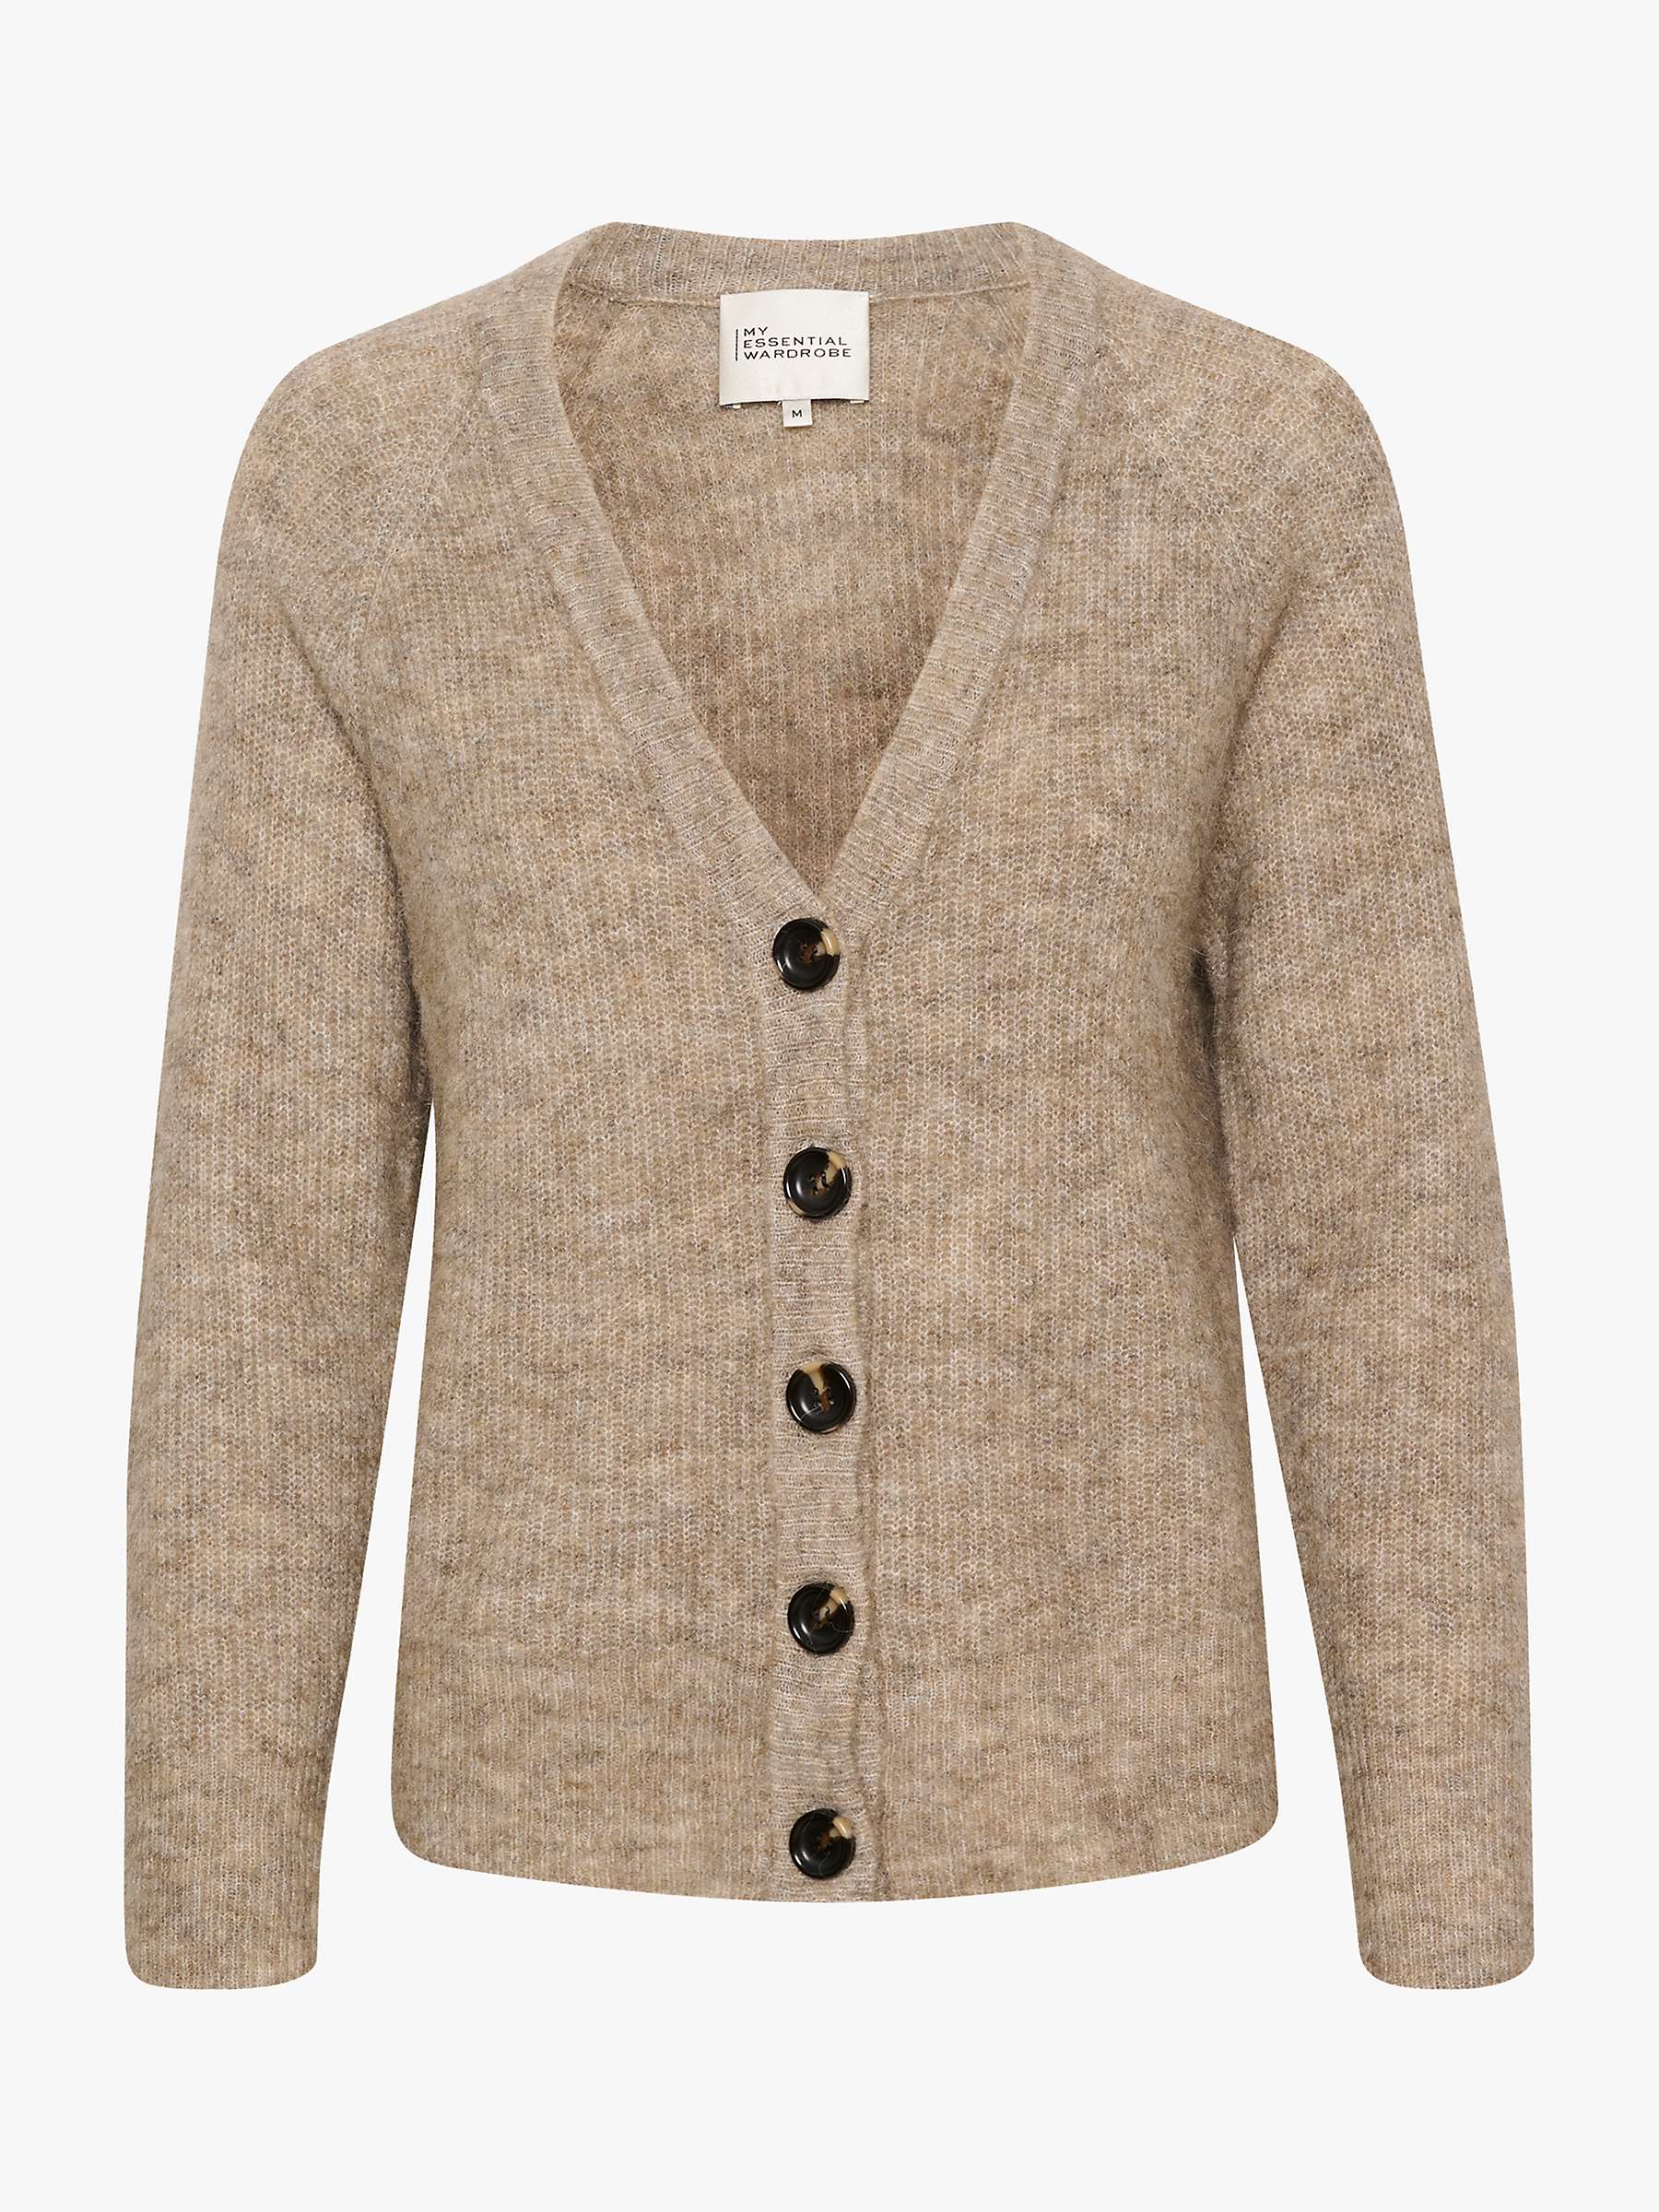 Buy MY ESSENTIAL WARDROBE Button Knit Wool Blend Cardigan Online at johnlewis.com